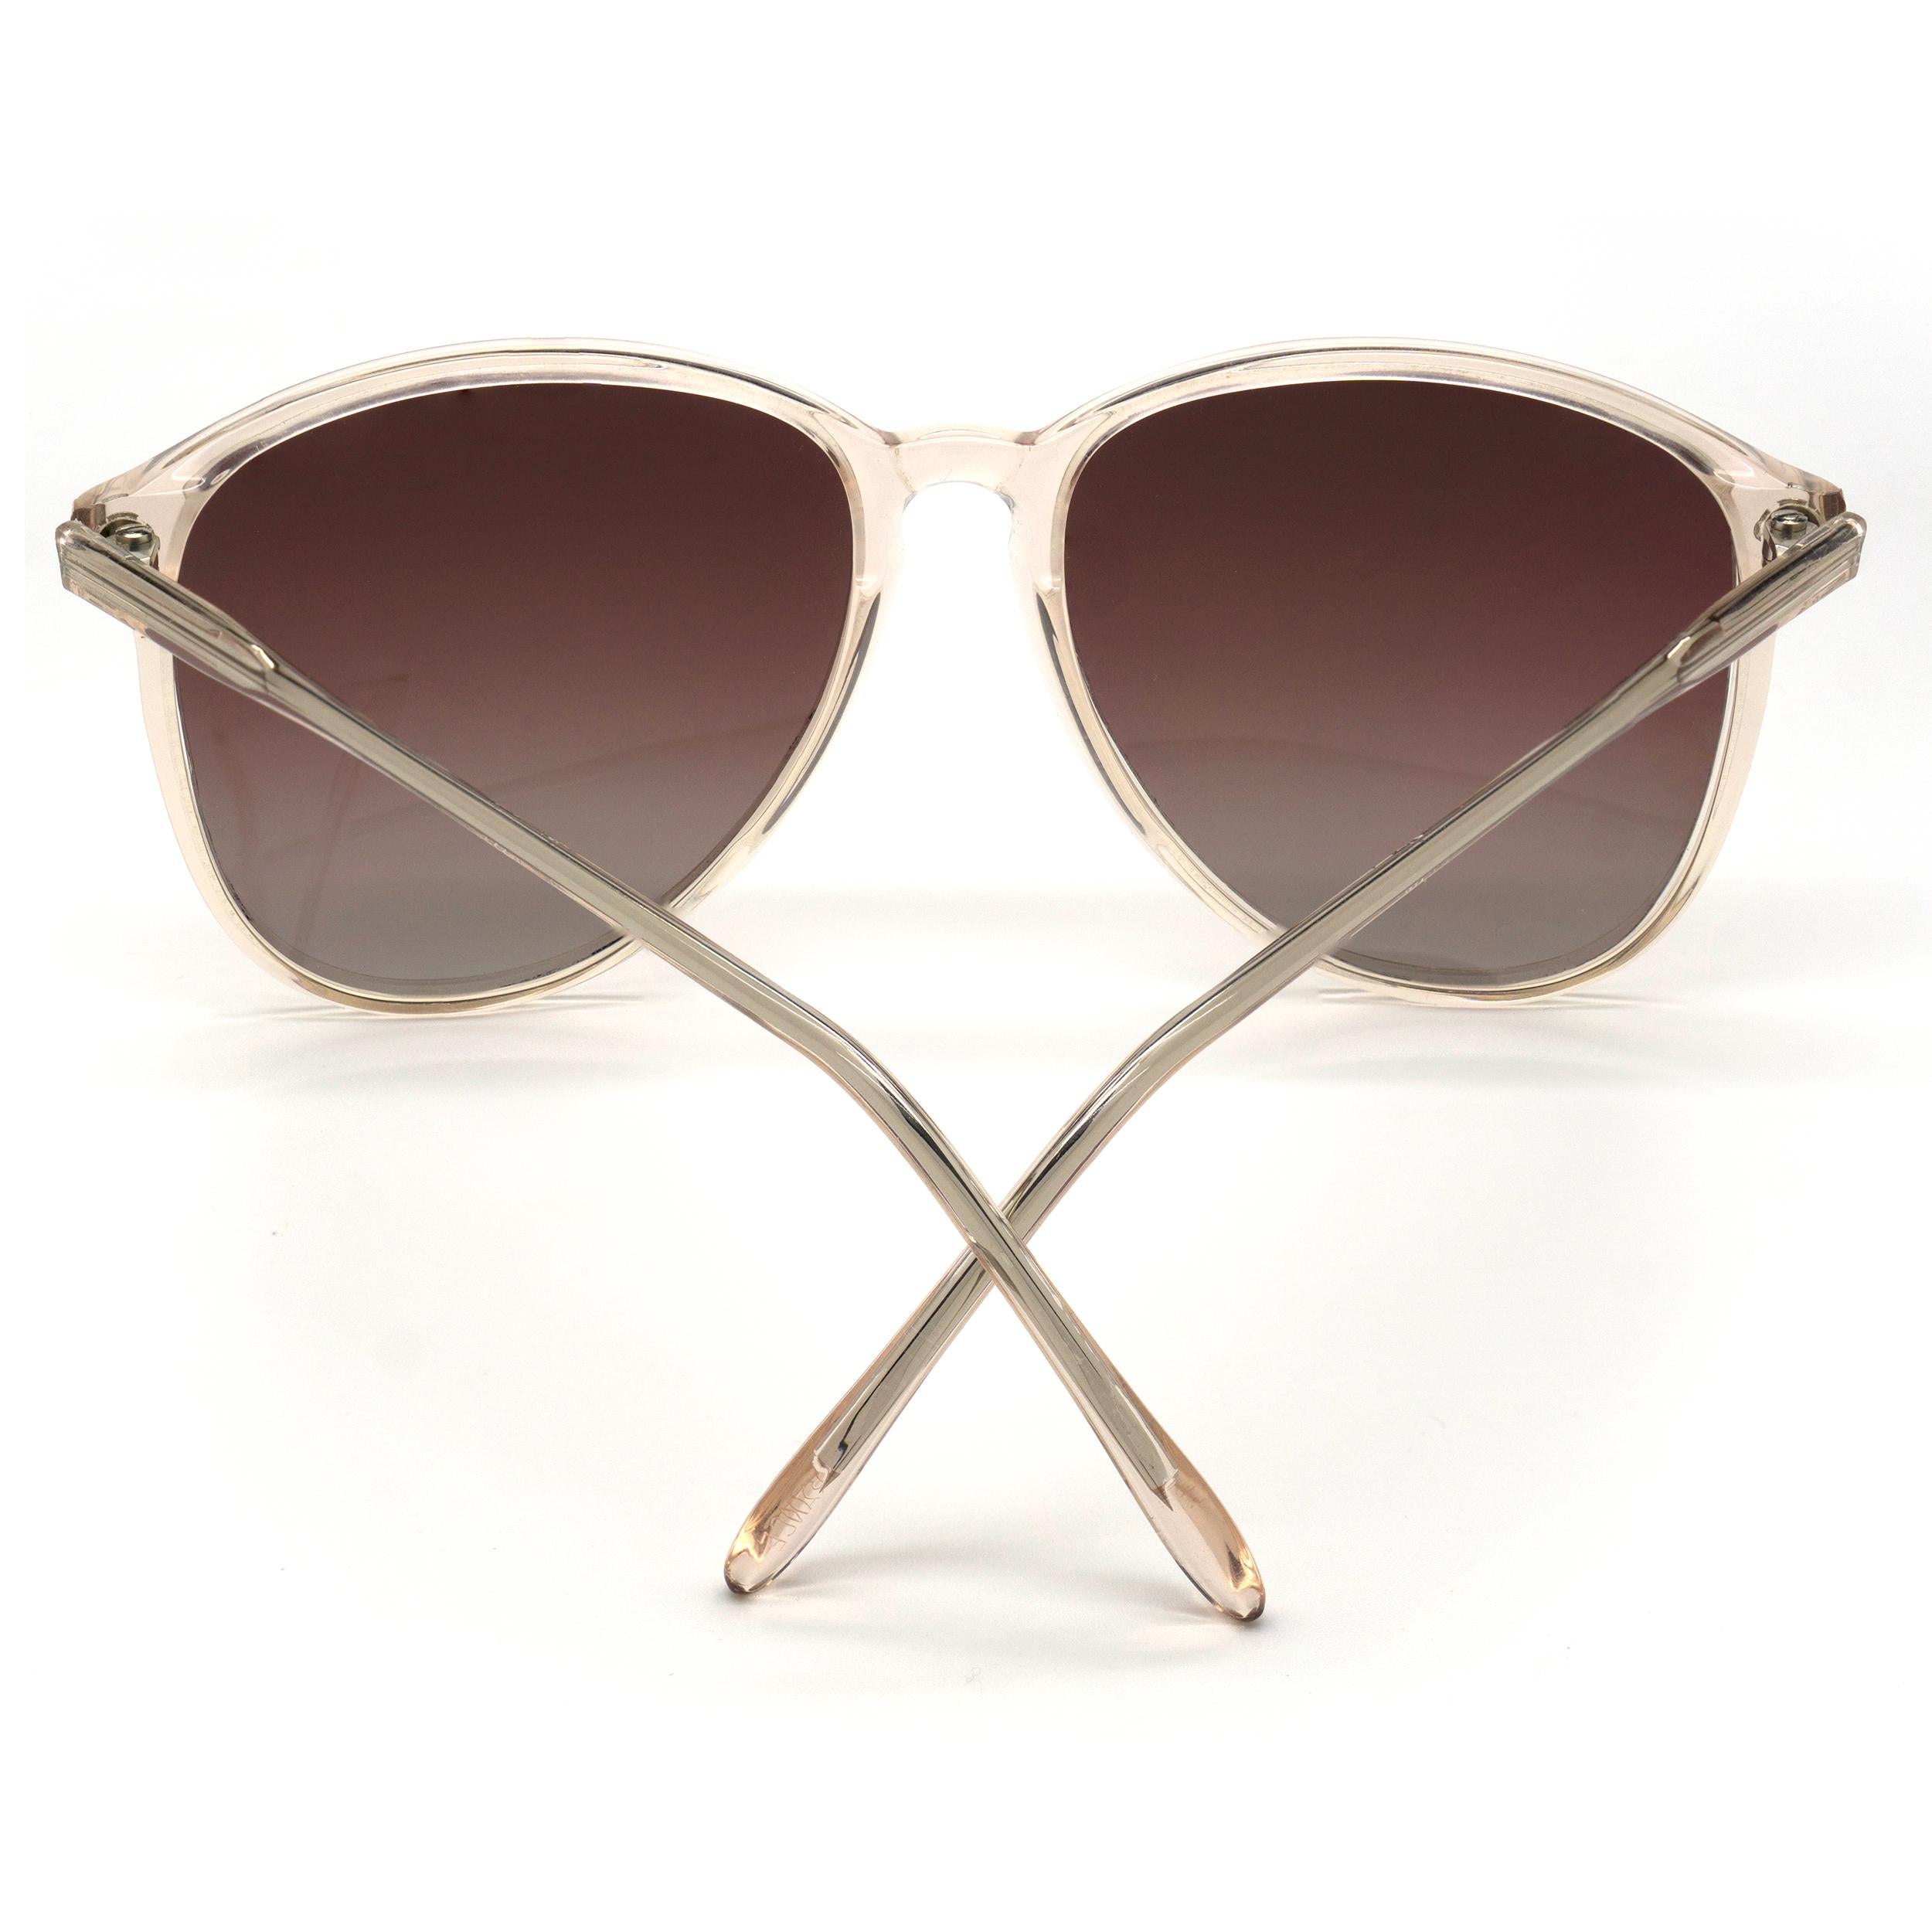 Argos vintage sunglasses, France 70s In New Condition For Sale In Santa Clarita, CA